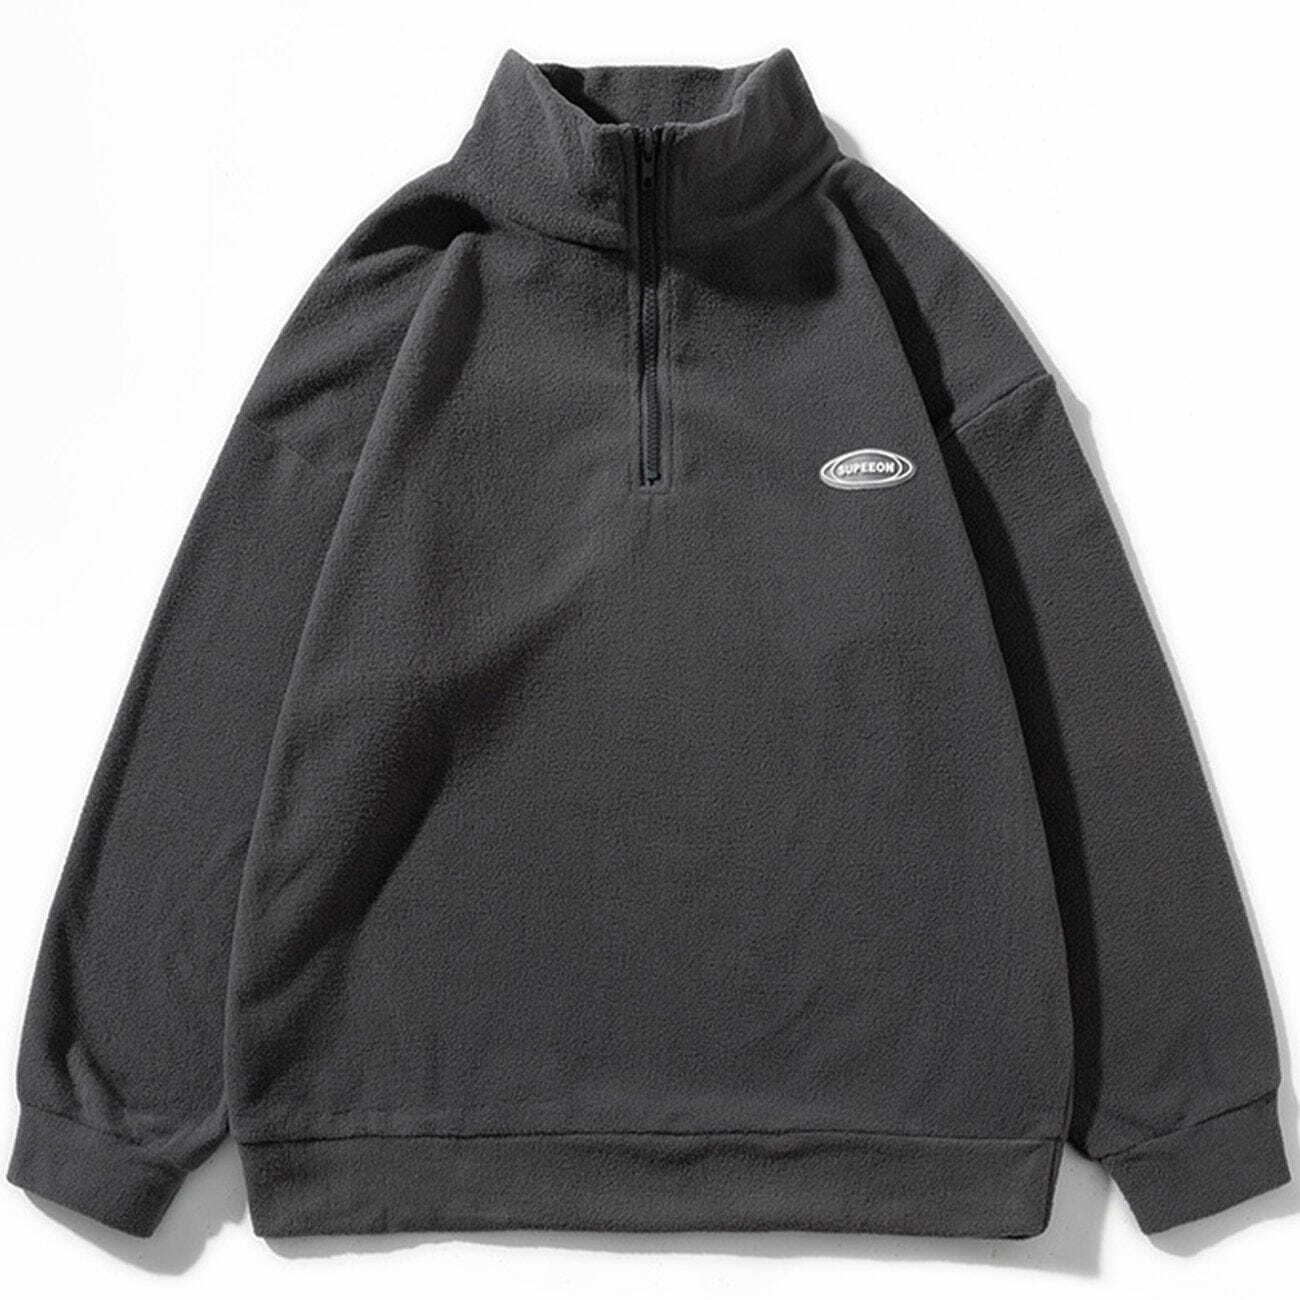 sleek lettered sweatshirt urban fashion essential 8182